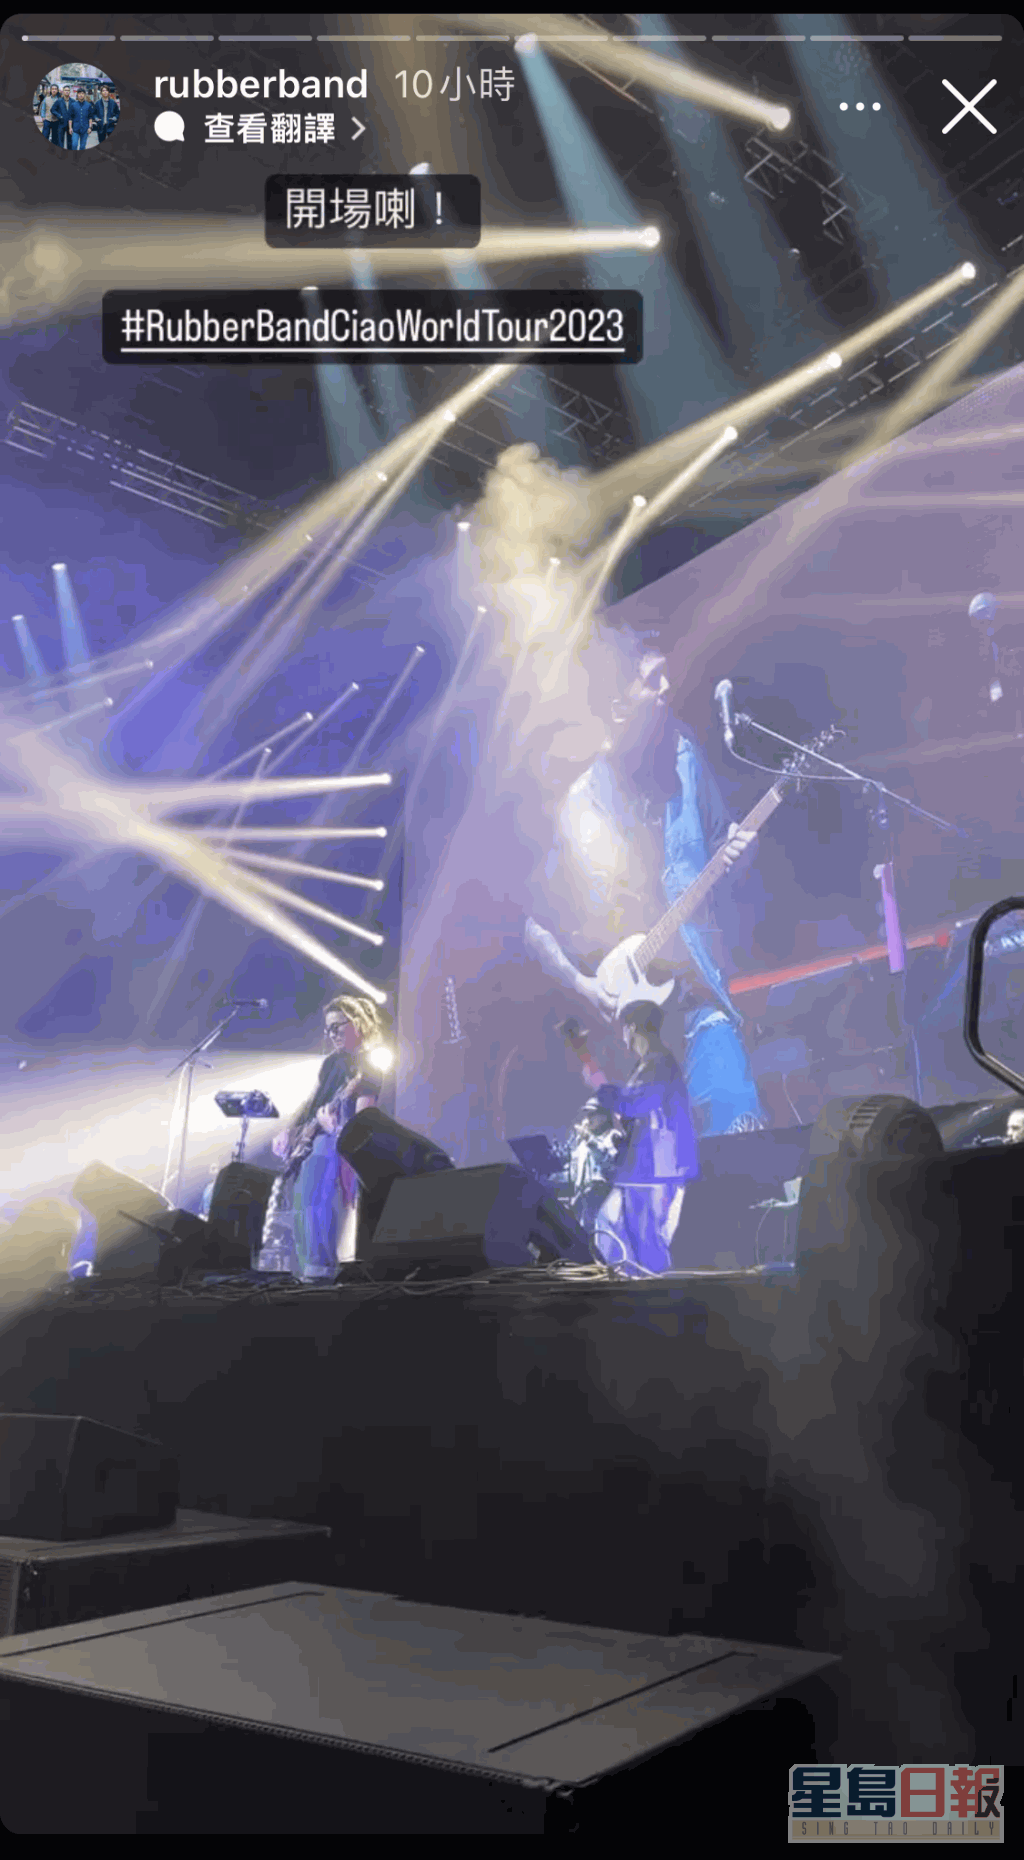 RubberBand昨晚在伦敦举行演唱会，之后会到英国曼彻斯特、德国及荷兰继续开骚。